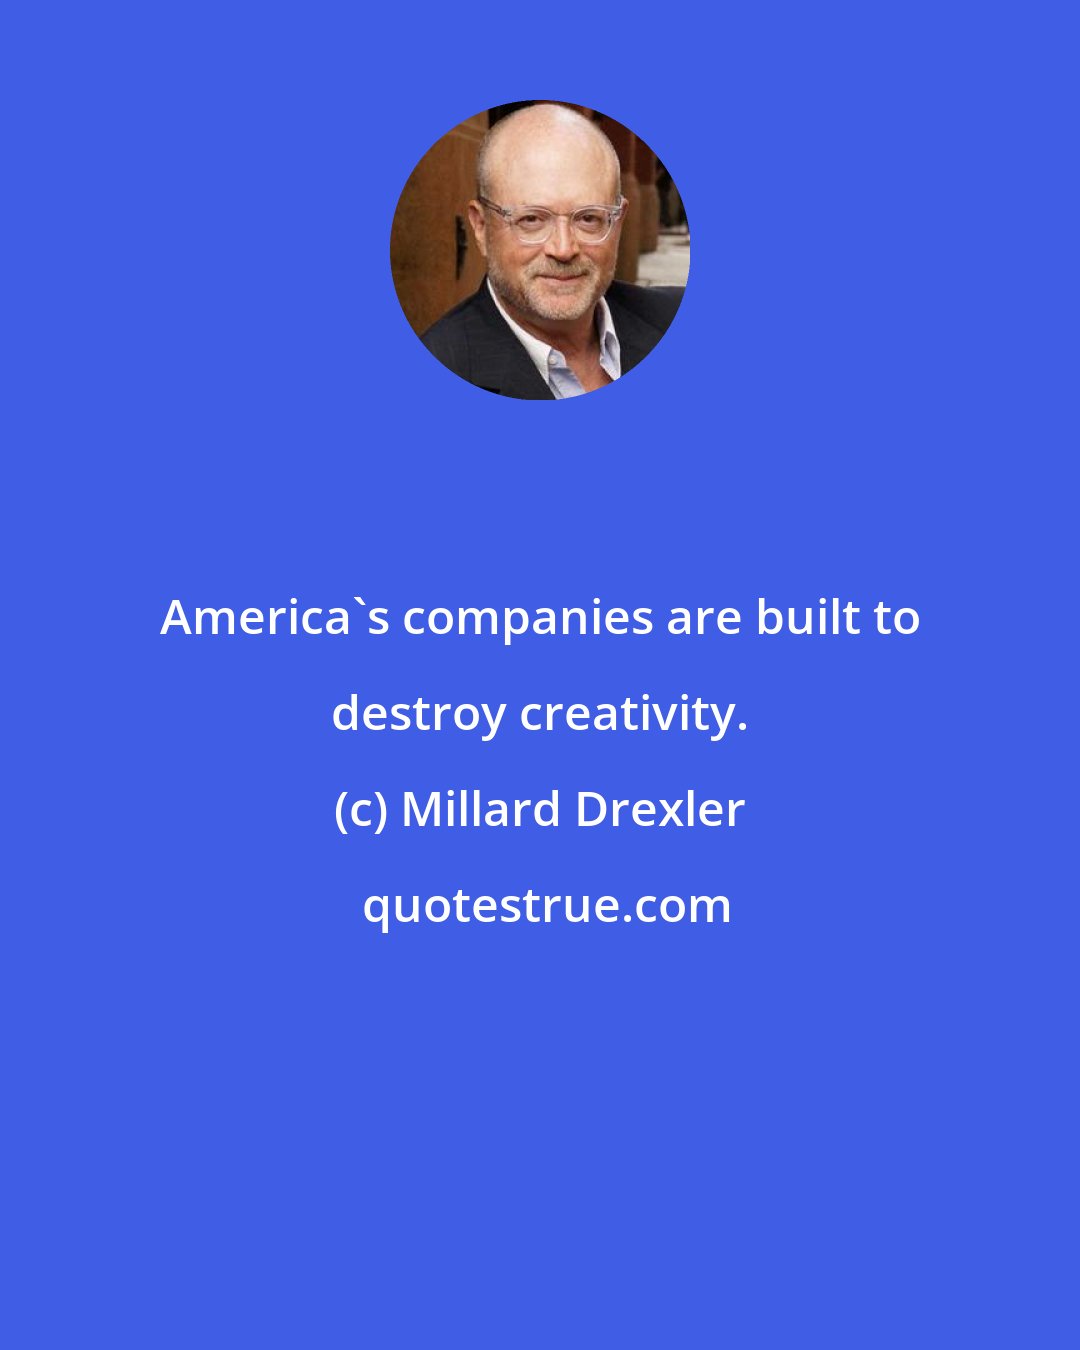 Millard Drexler: America's companies are built to destroy creativity.